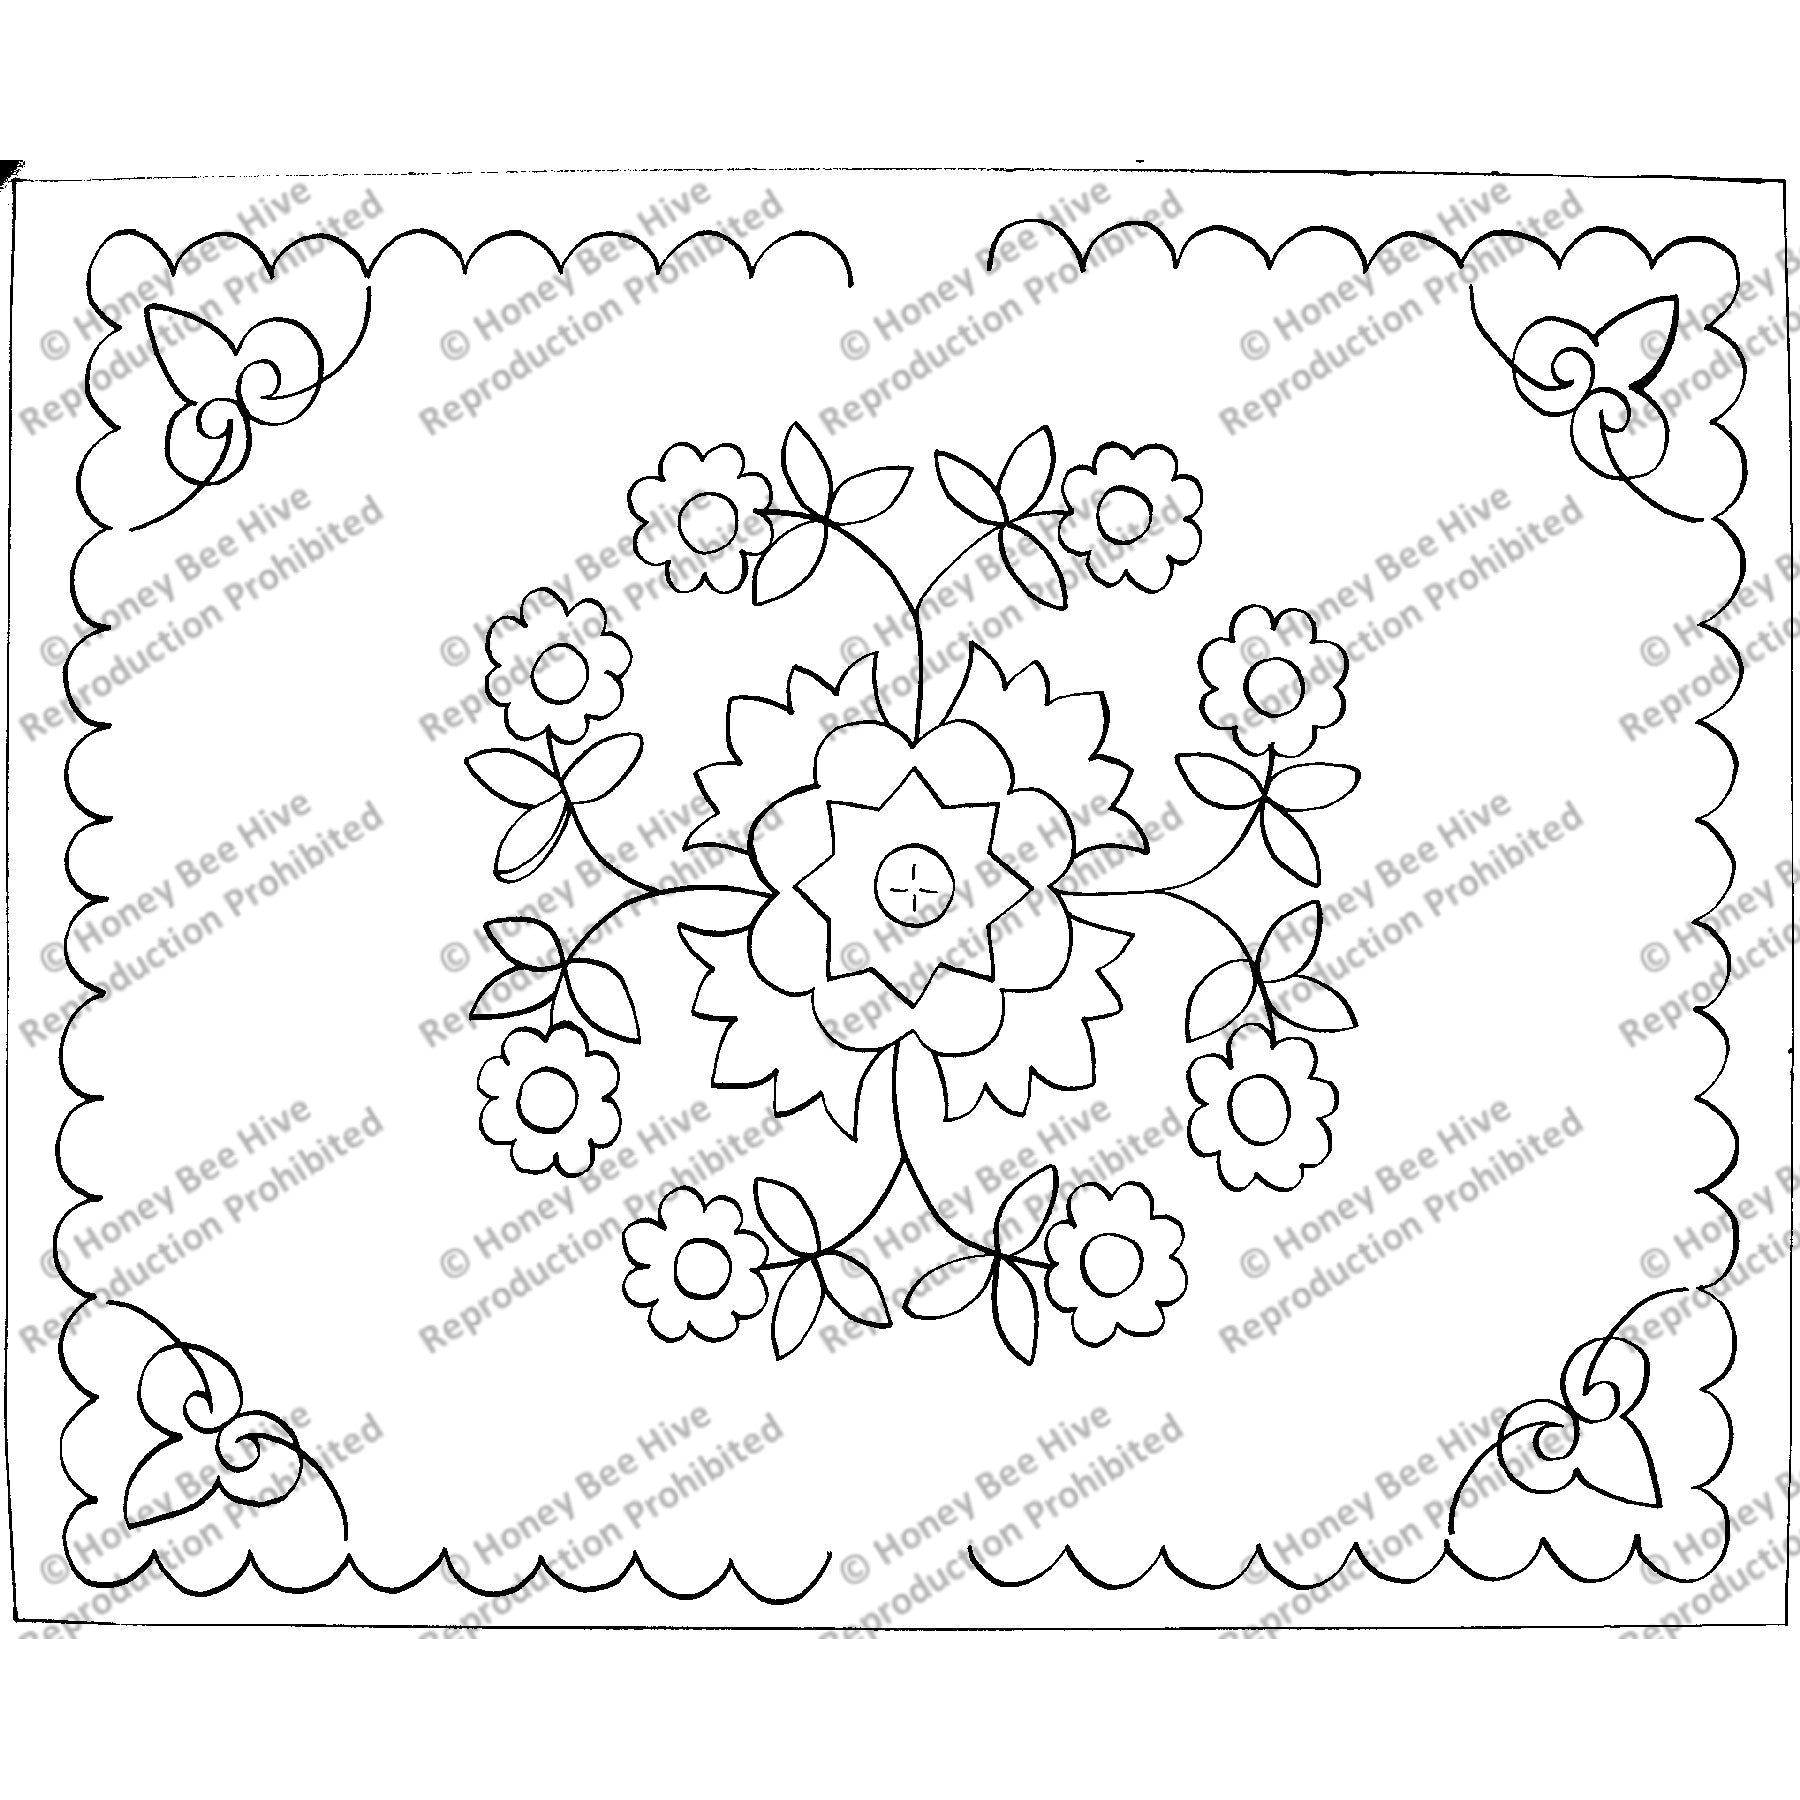 Scalloping Floral, rug hooking pattern